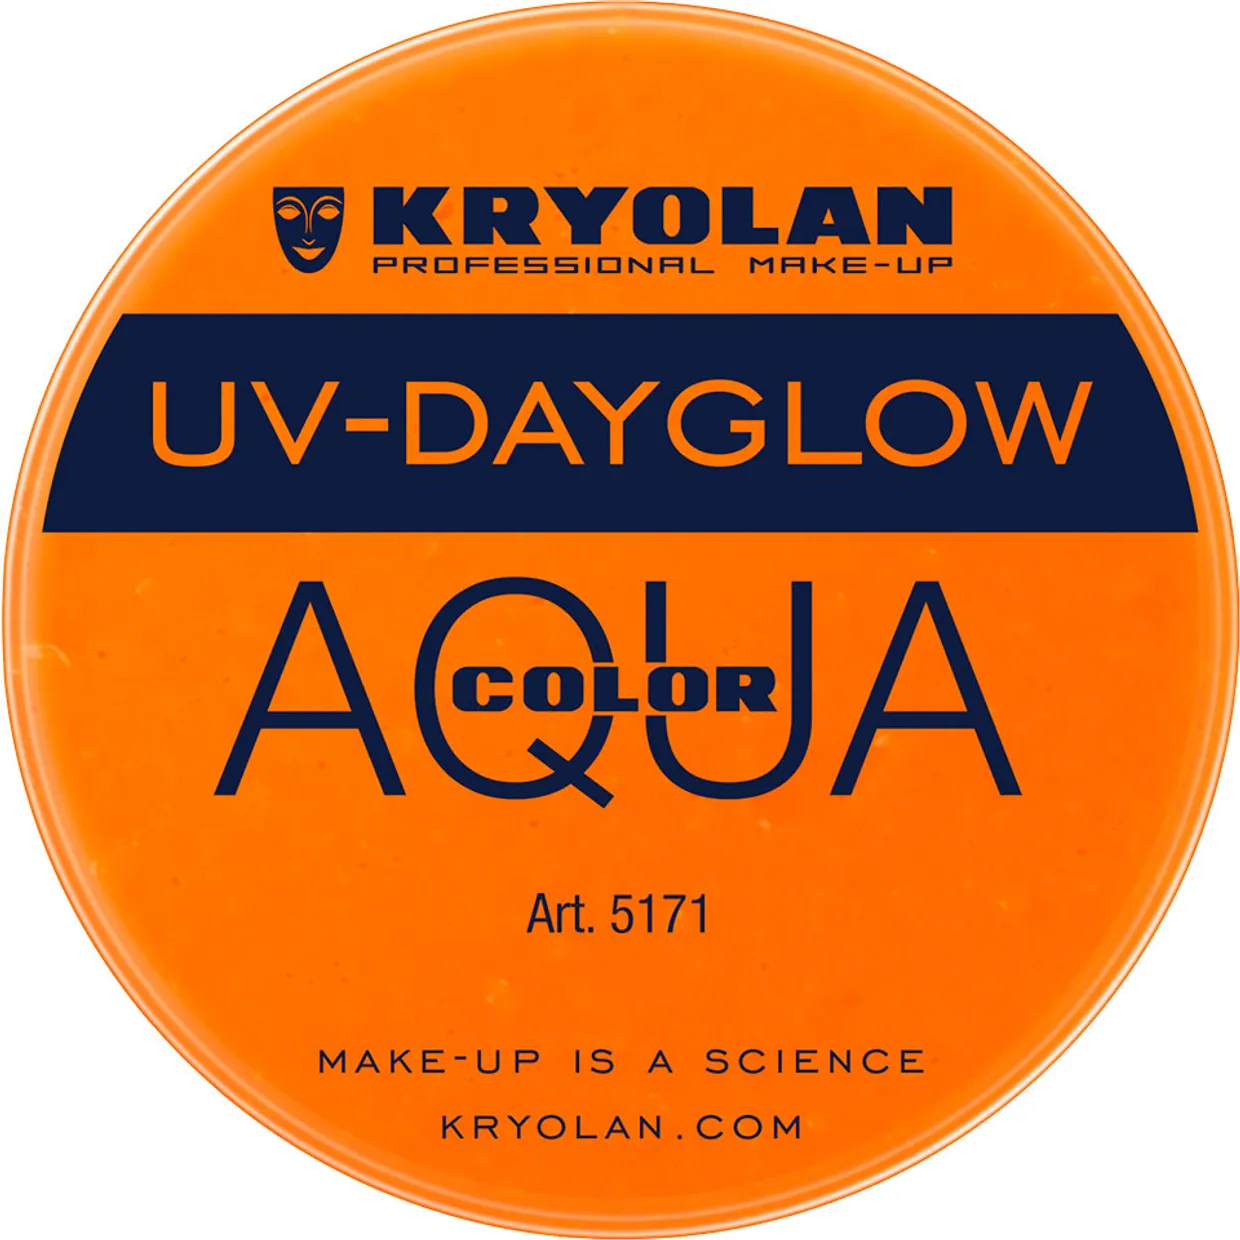 AQUACOLOR UV-DAYGLOW UV yellow KRYOLAN